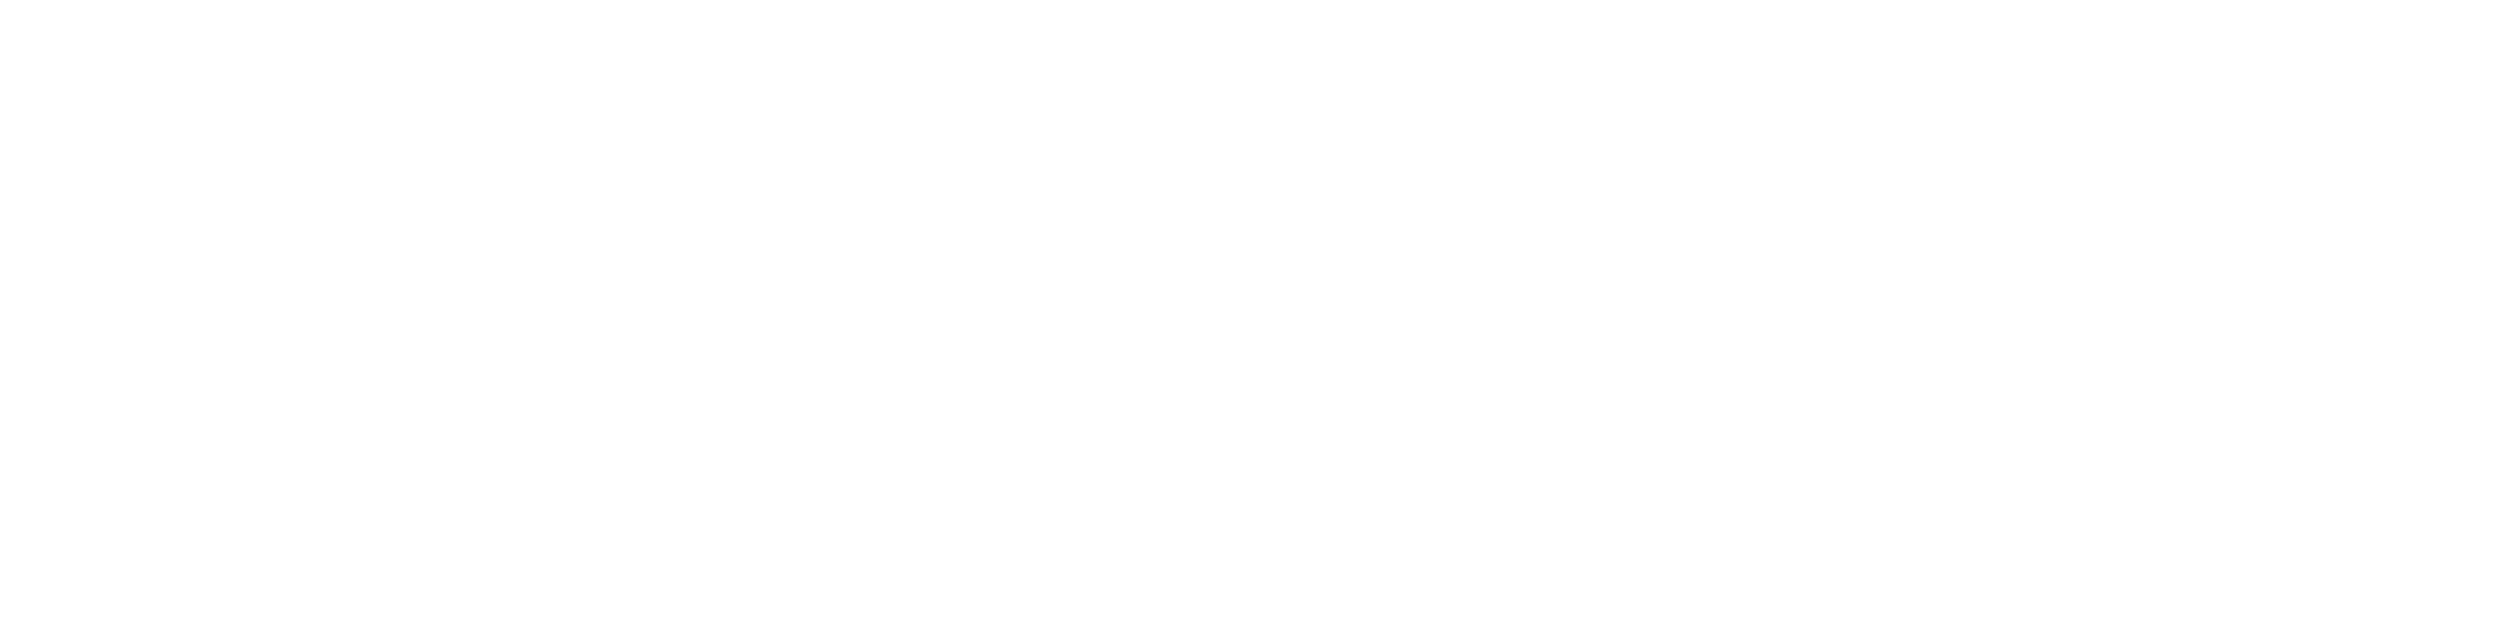 Wedding photography | Wedding photographers Auckland | Charlotte Christian photography